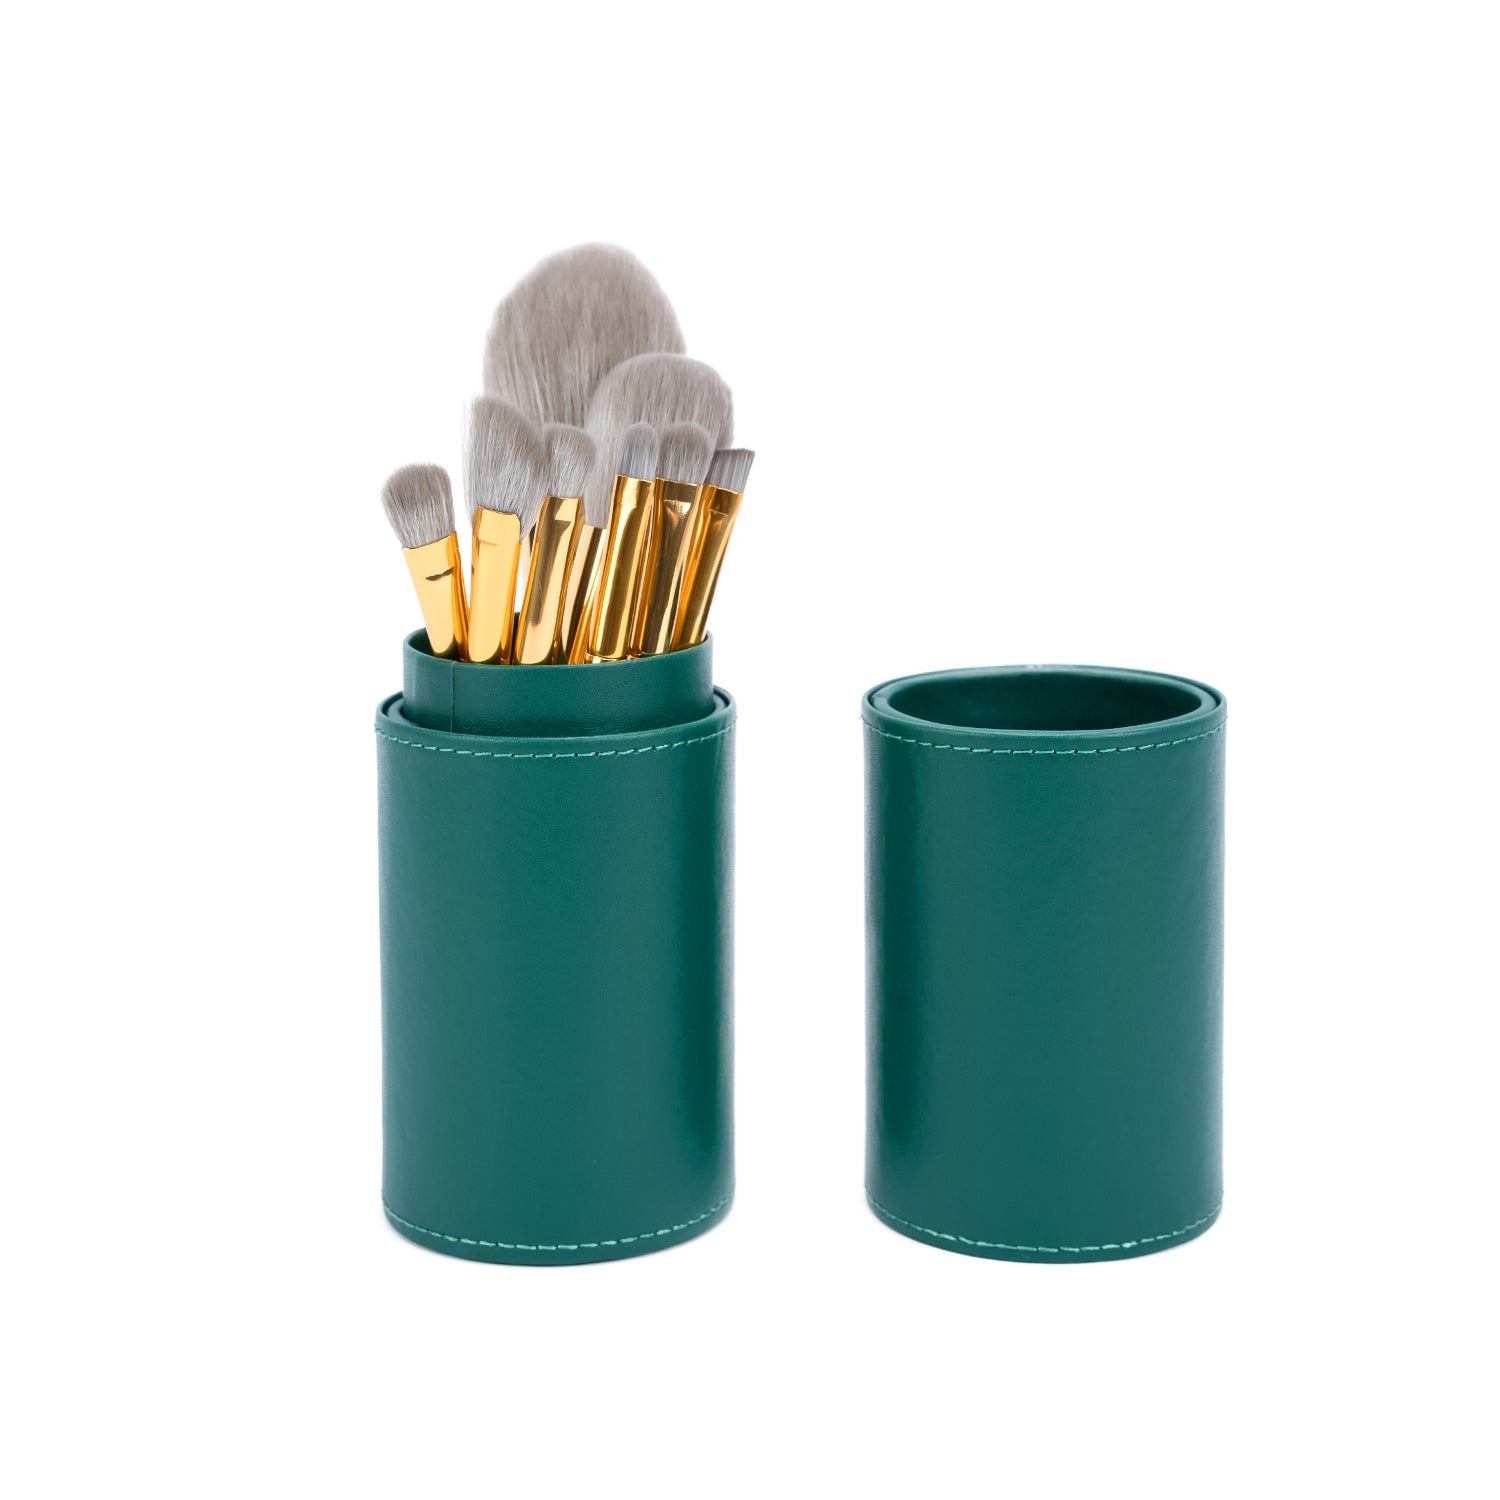 JOVS Customized Cosmetic Brushes 8pcs Set in Stylish Green Holder.